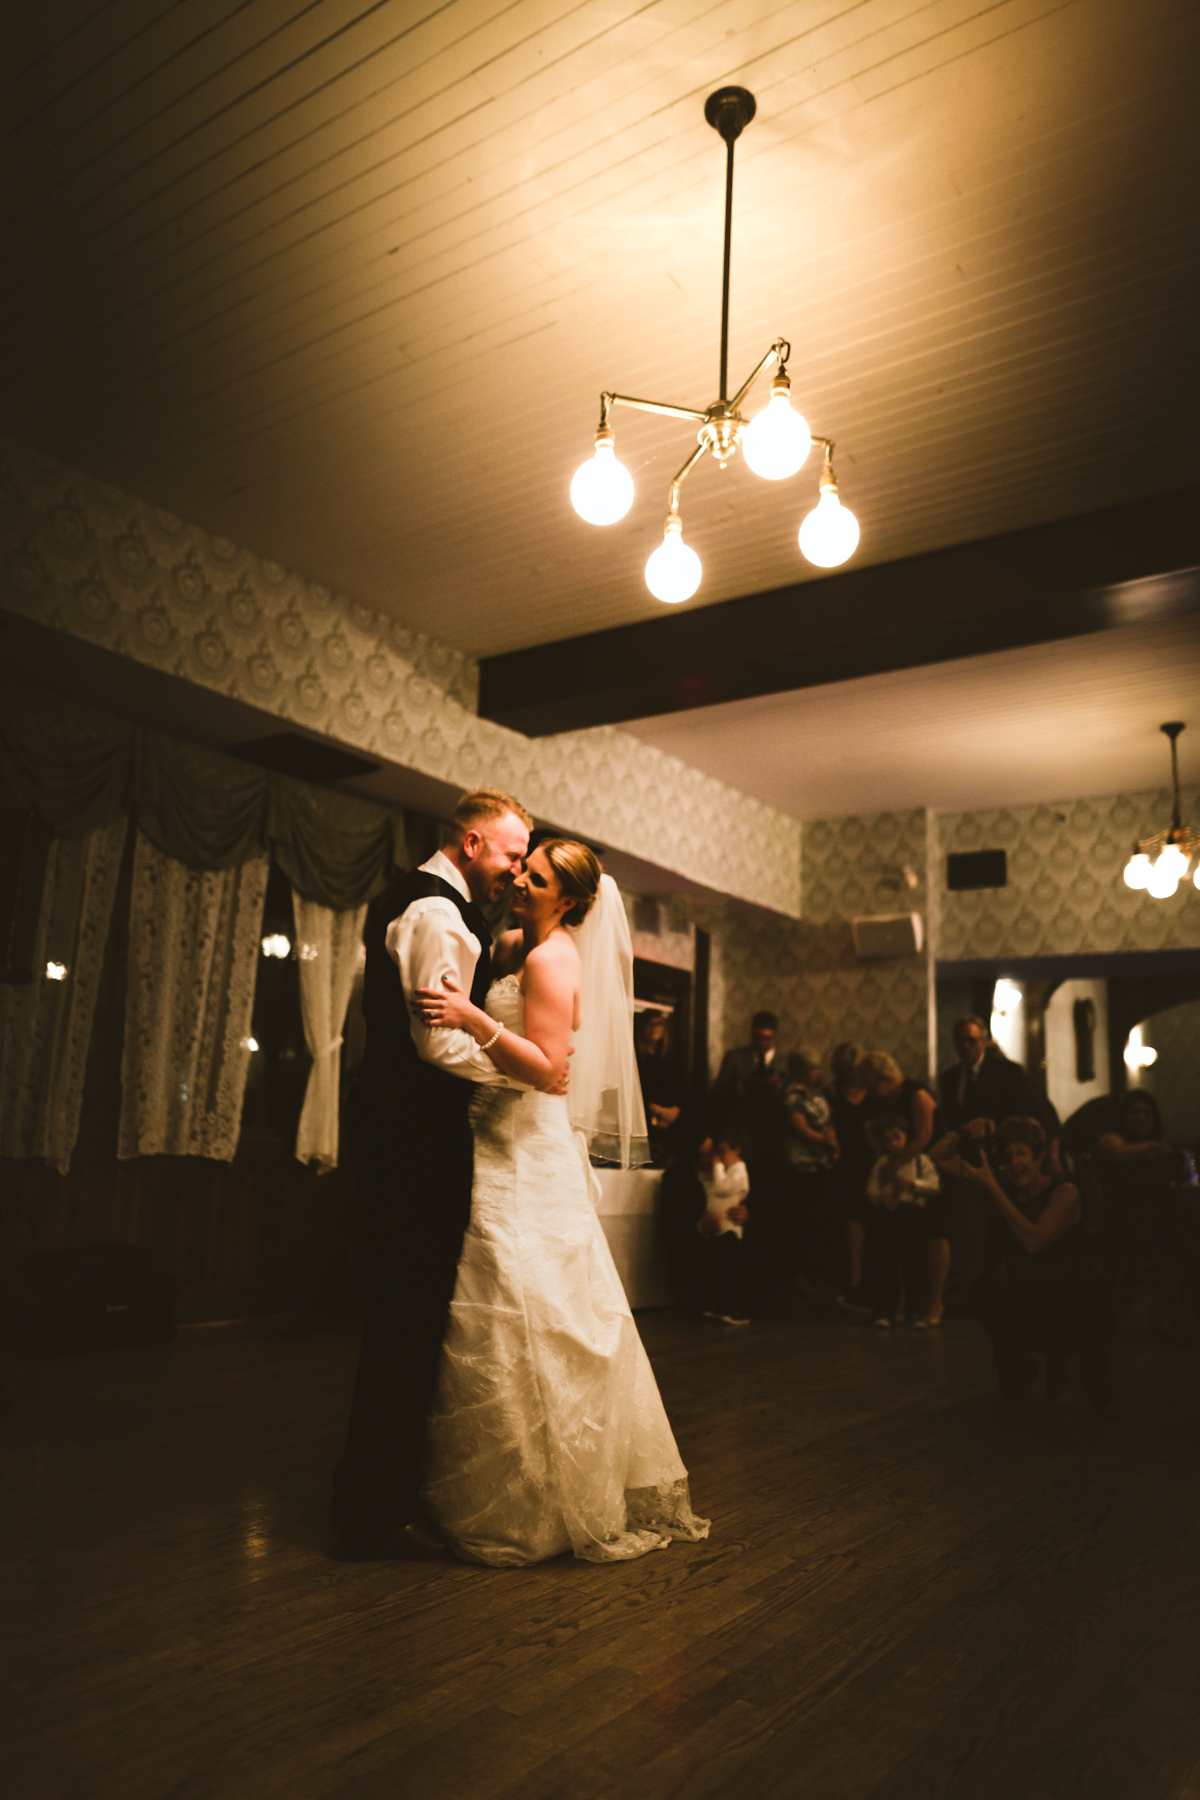 Calgary affordable wedding photography at Heritage Park Wainwright Hotel indoor venue, Alberta - Photo 45